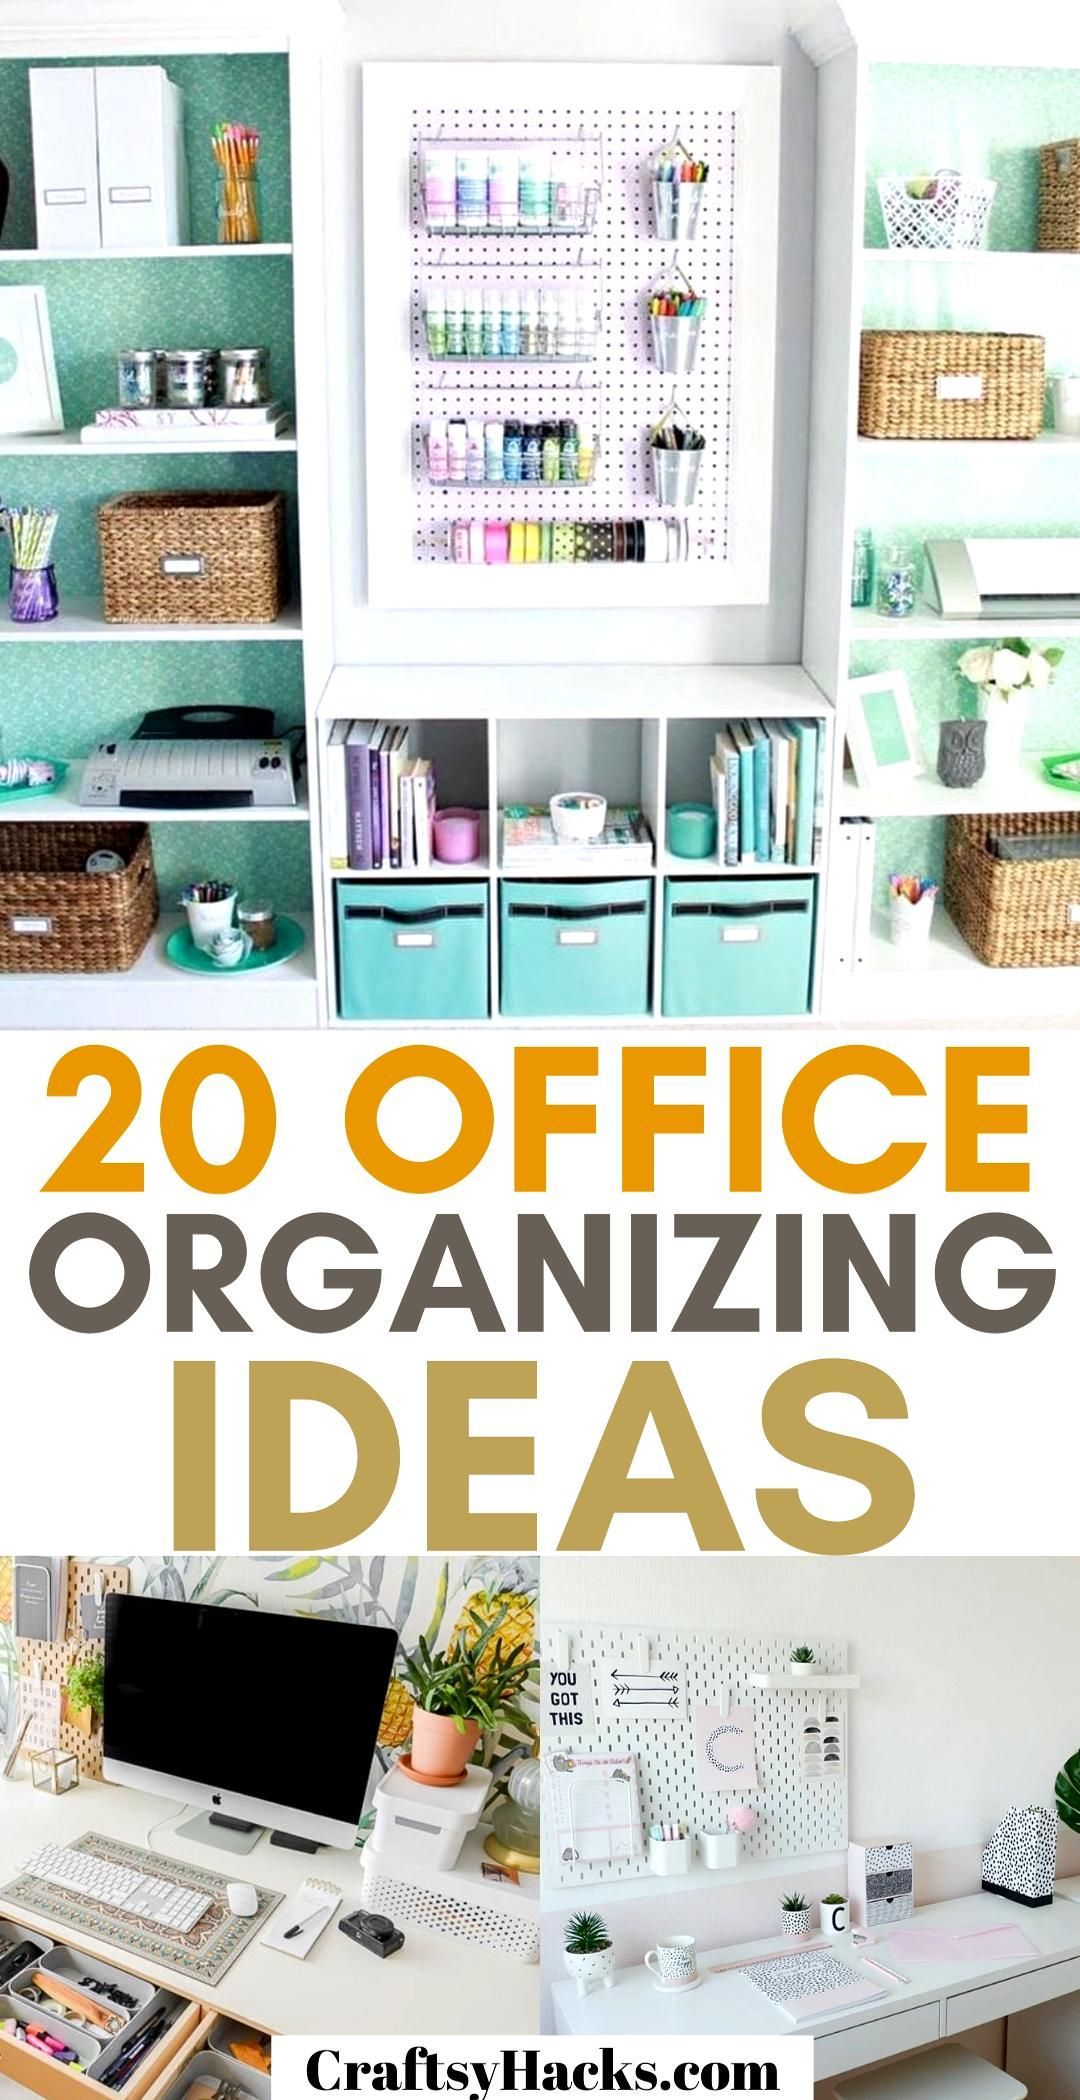 20 Office Organizing Ideas - 20 Office Organizing Ideas -   19 diy Organization hacks ideas